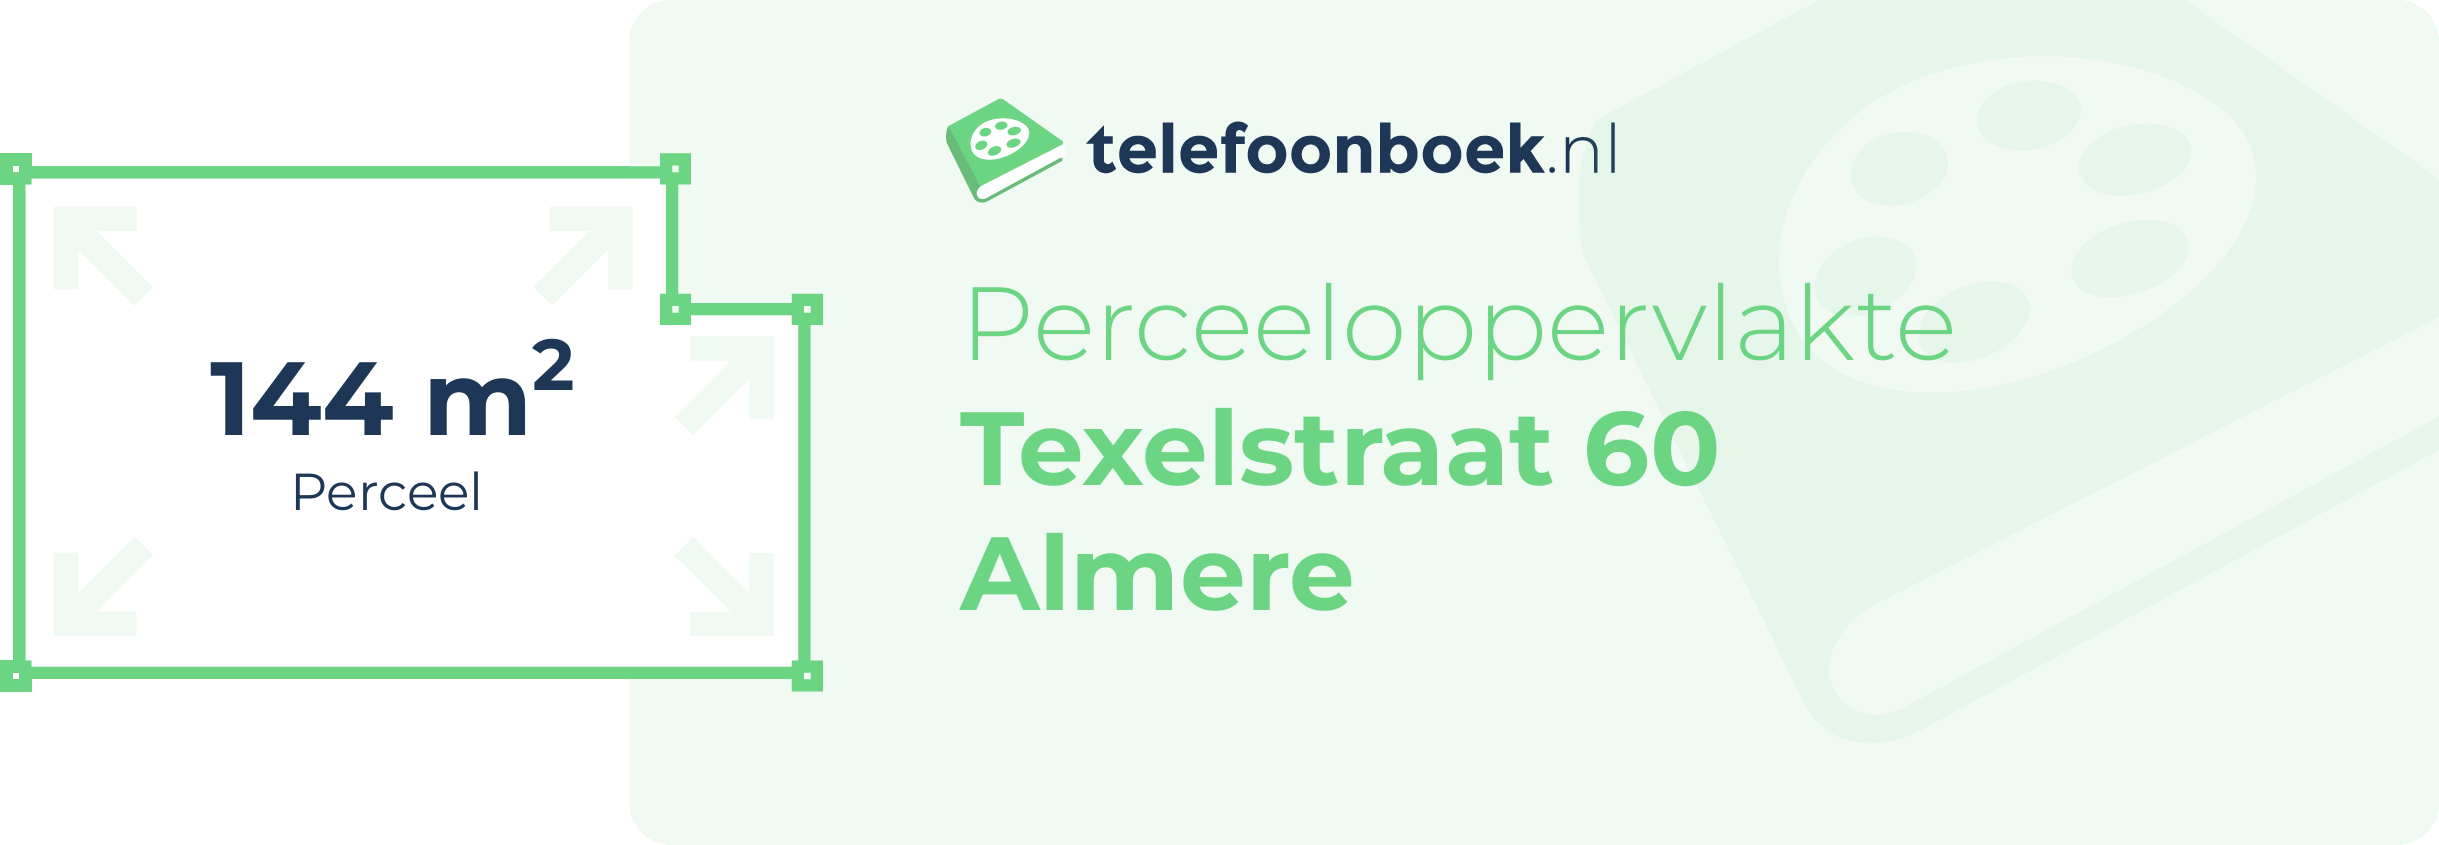 Perceeloppervlakte Texelstraat 60 Almere